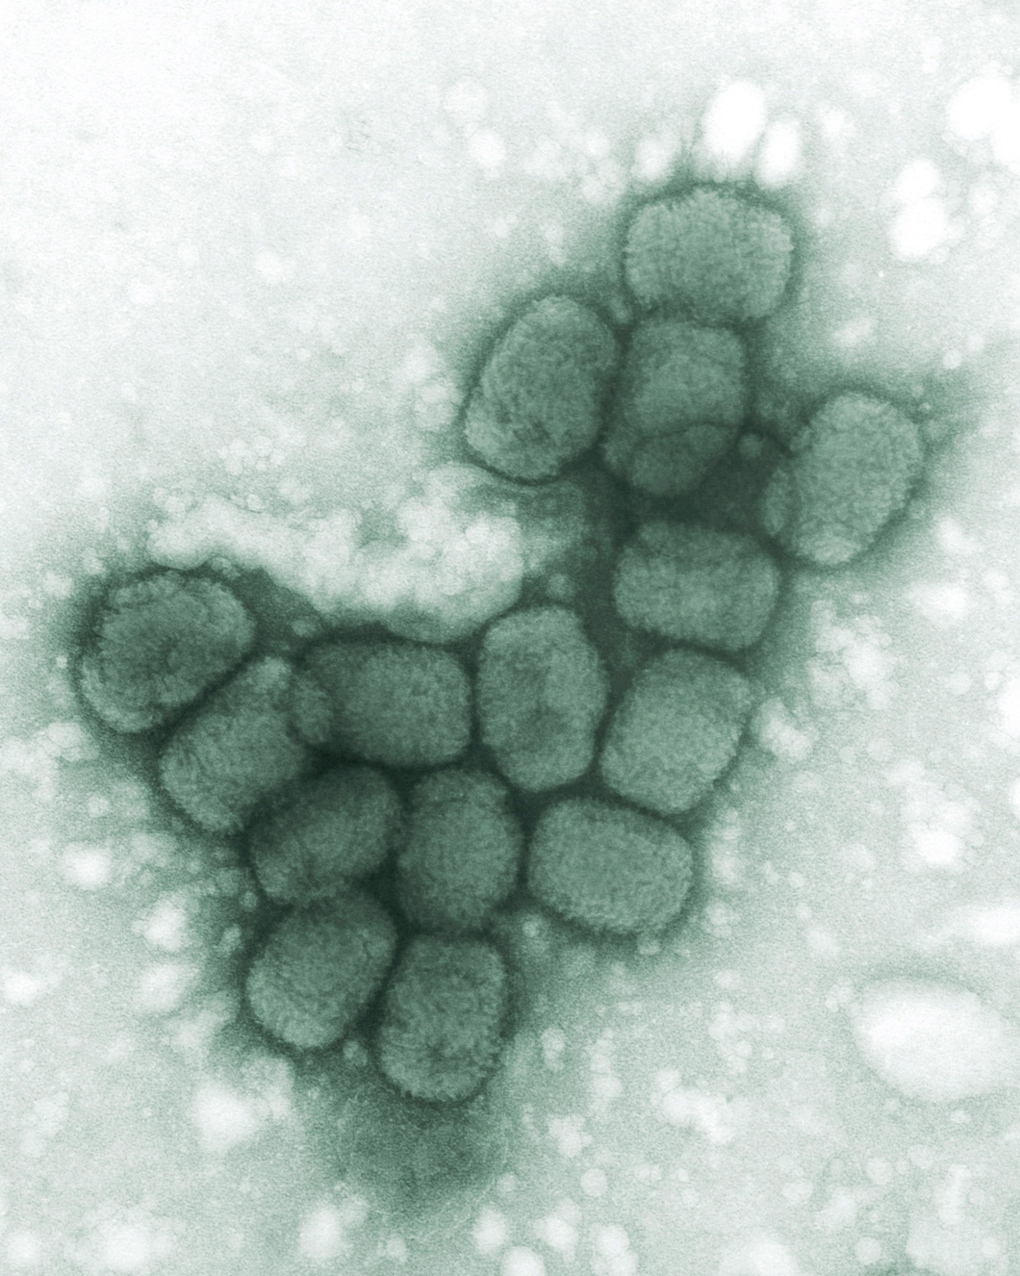 Electron micrograph of smallpox viruses